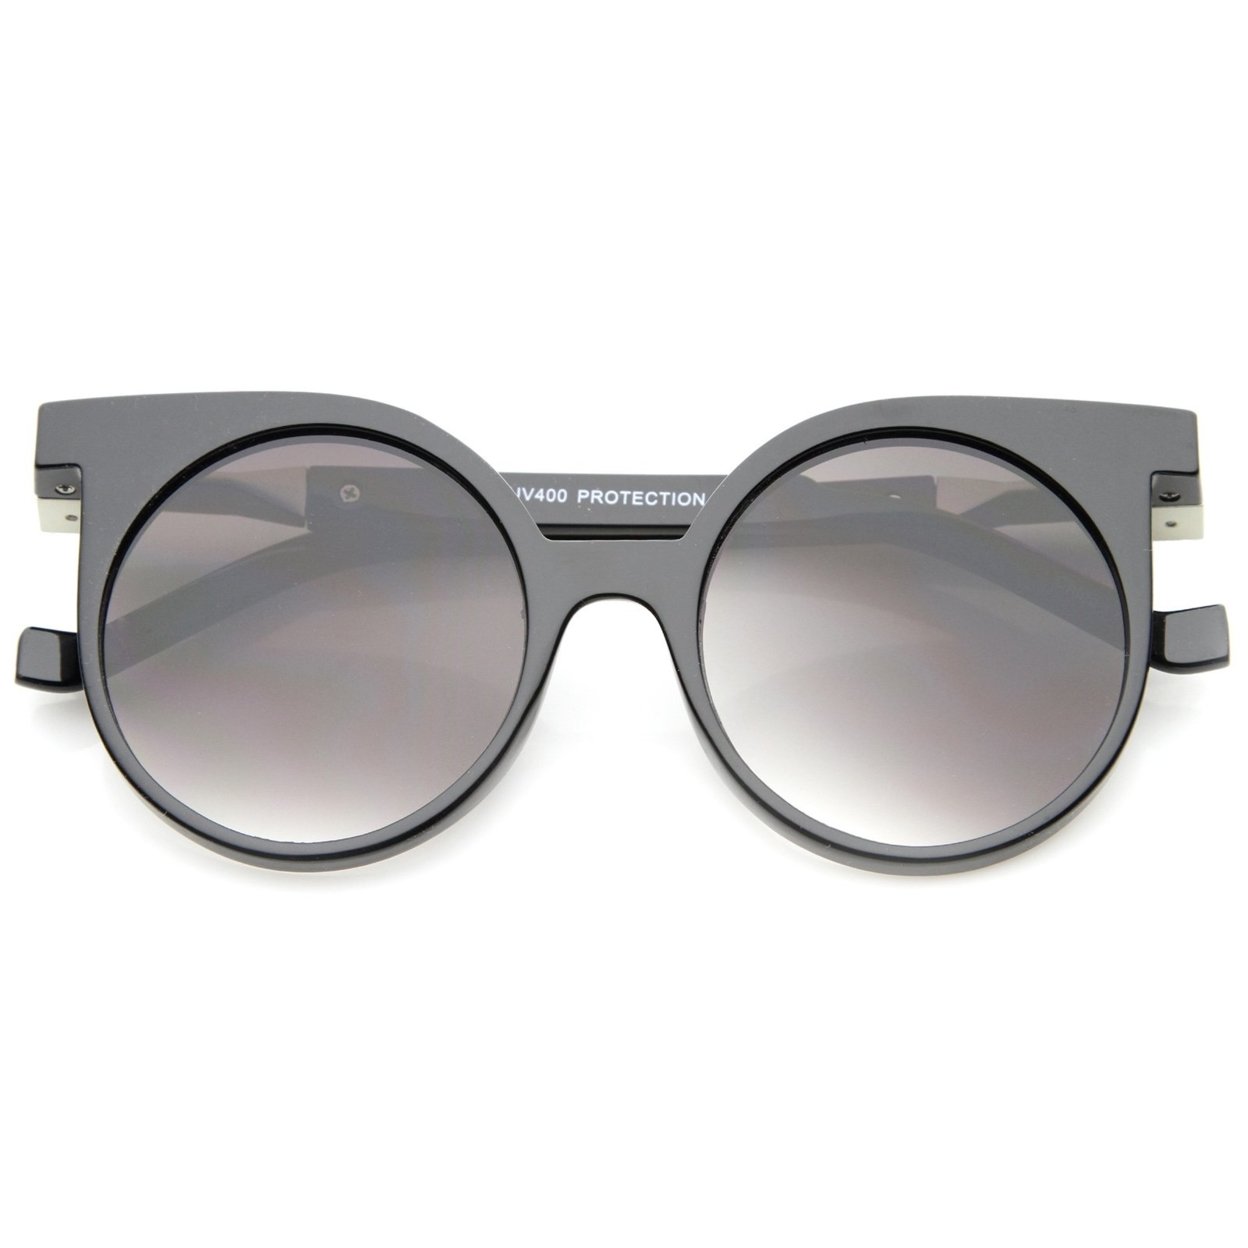 Modern Horn Rimmed Neutral-Colored Flat Lens Round Sunglasses 50mm - Shiny Black / Lavender